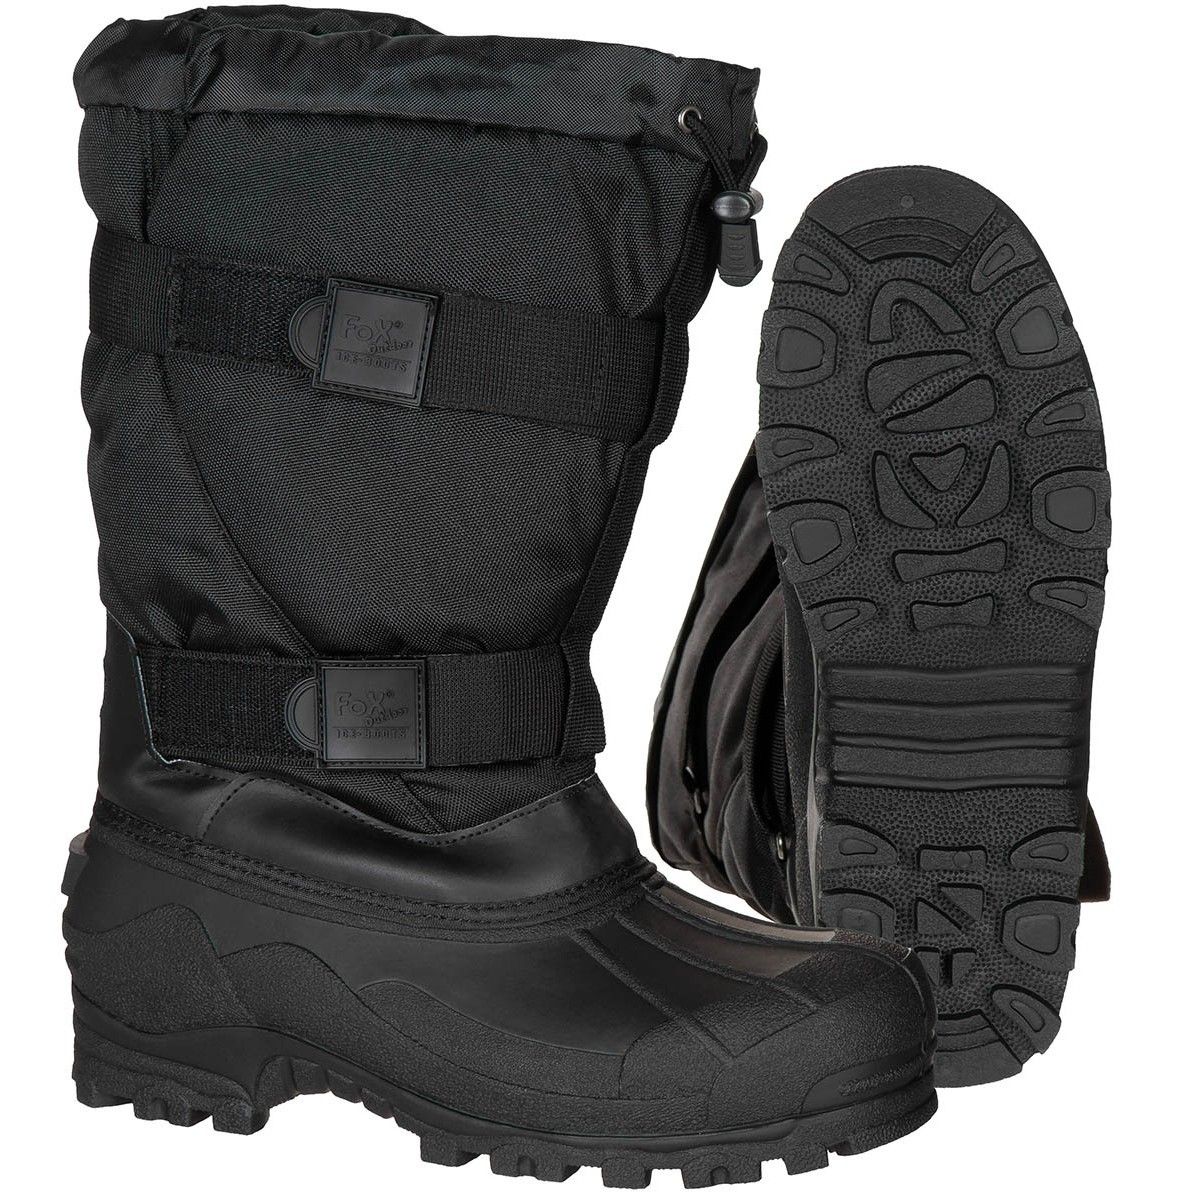 buty śniegowce -40 c fox outdoor czarne 44